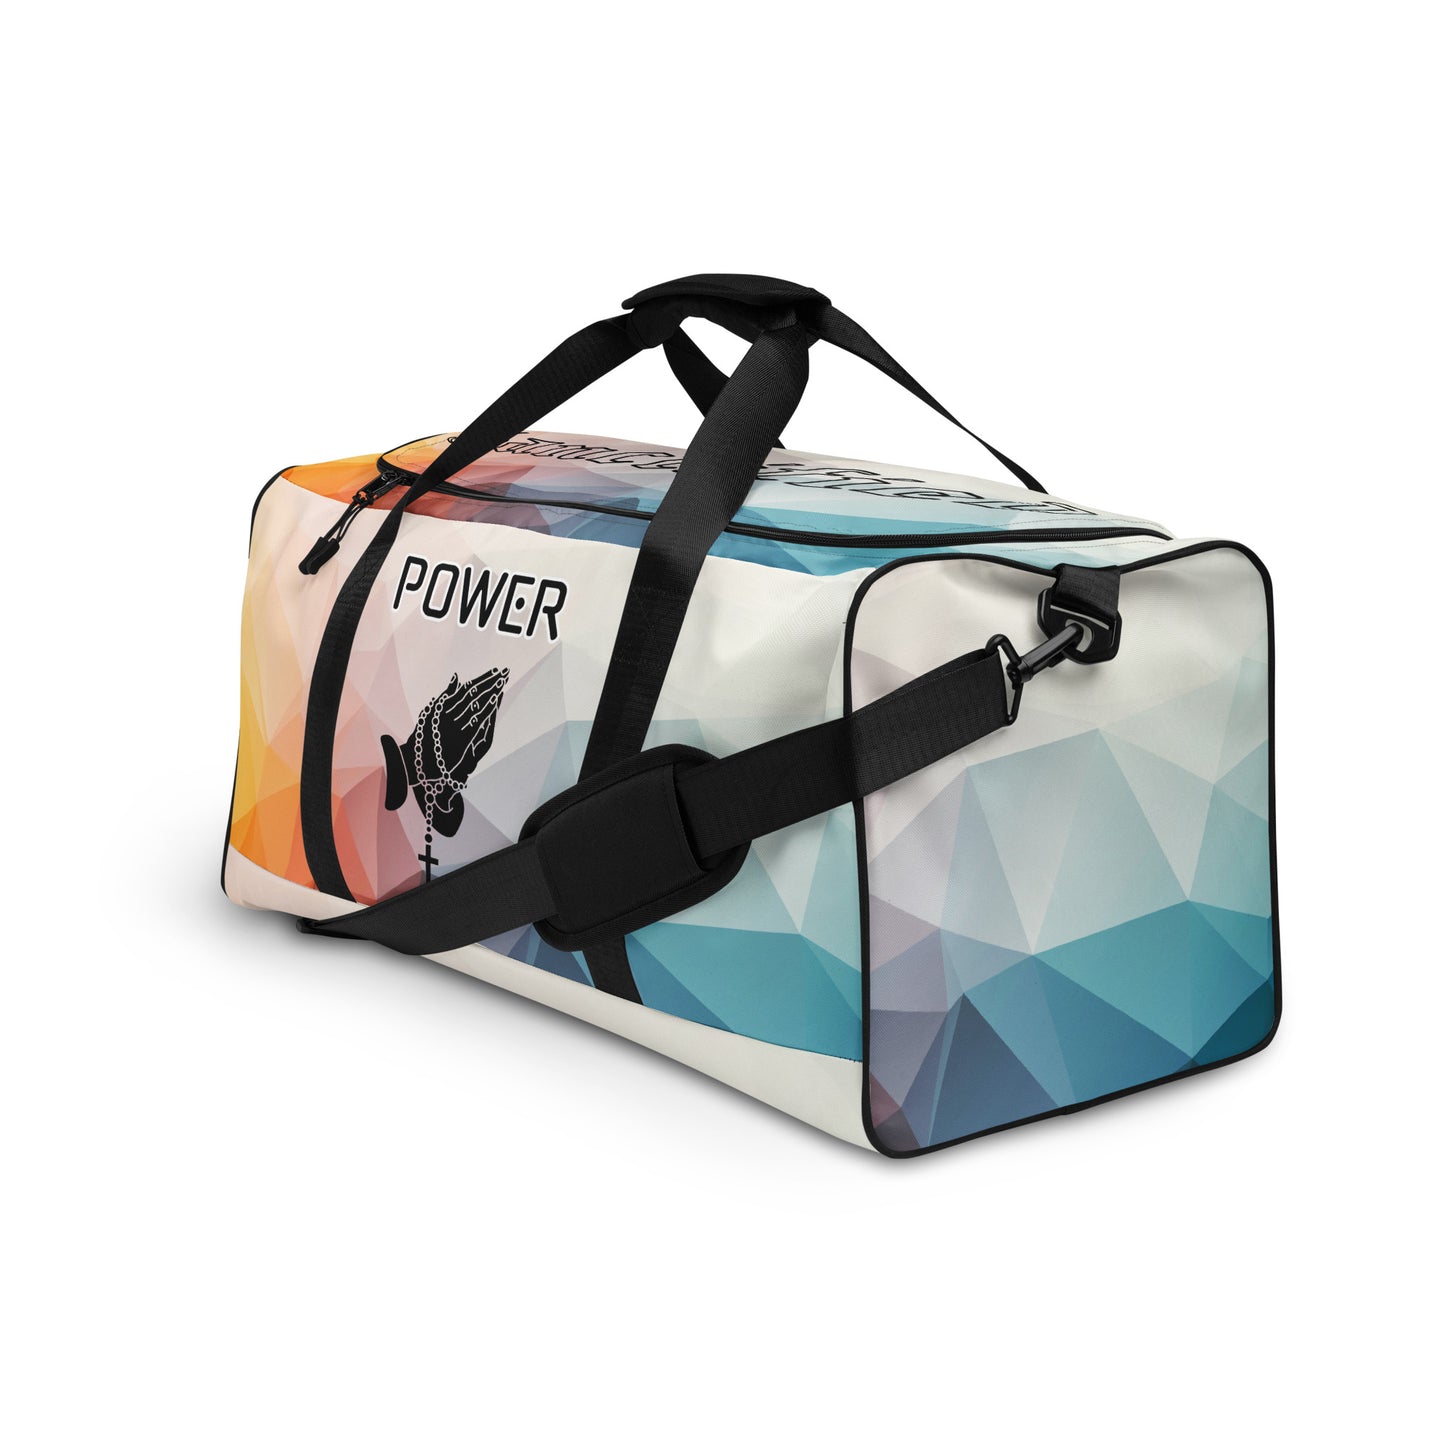 Prayer Power- Duffle bag